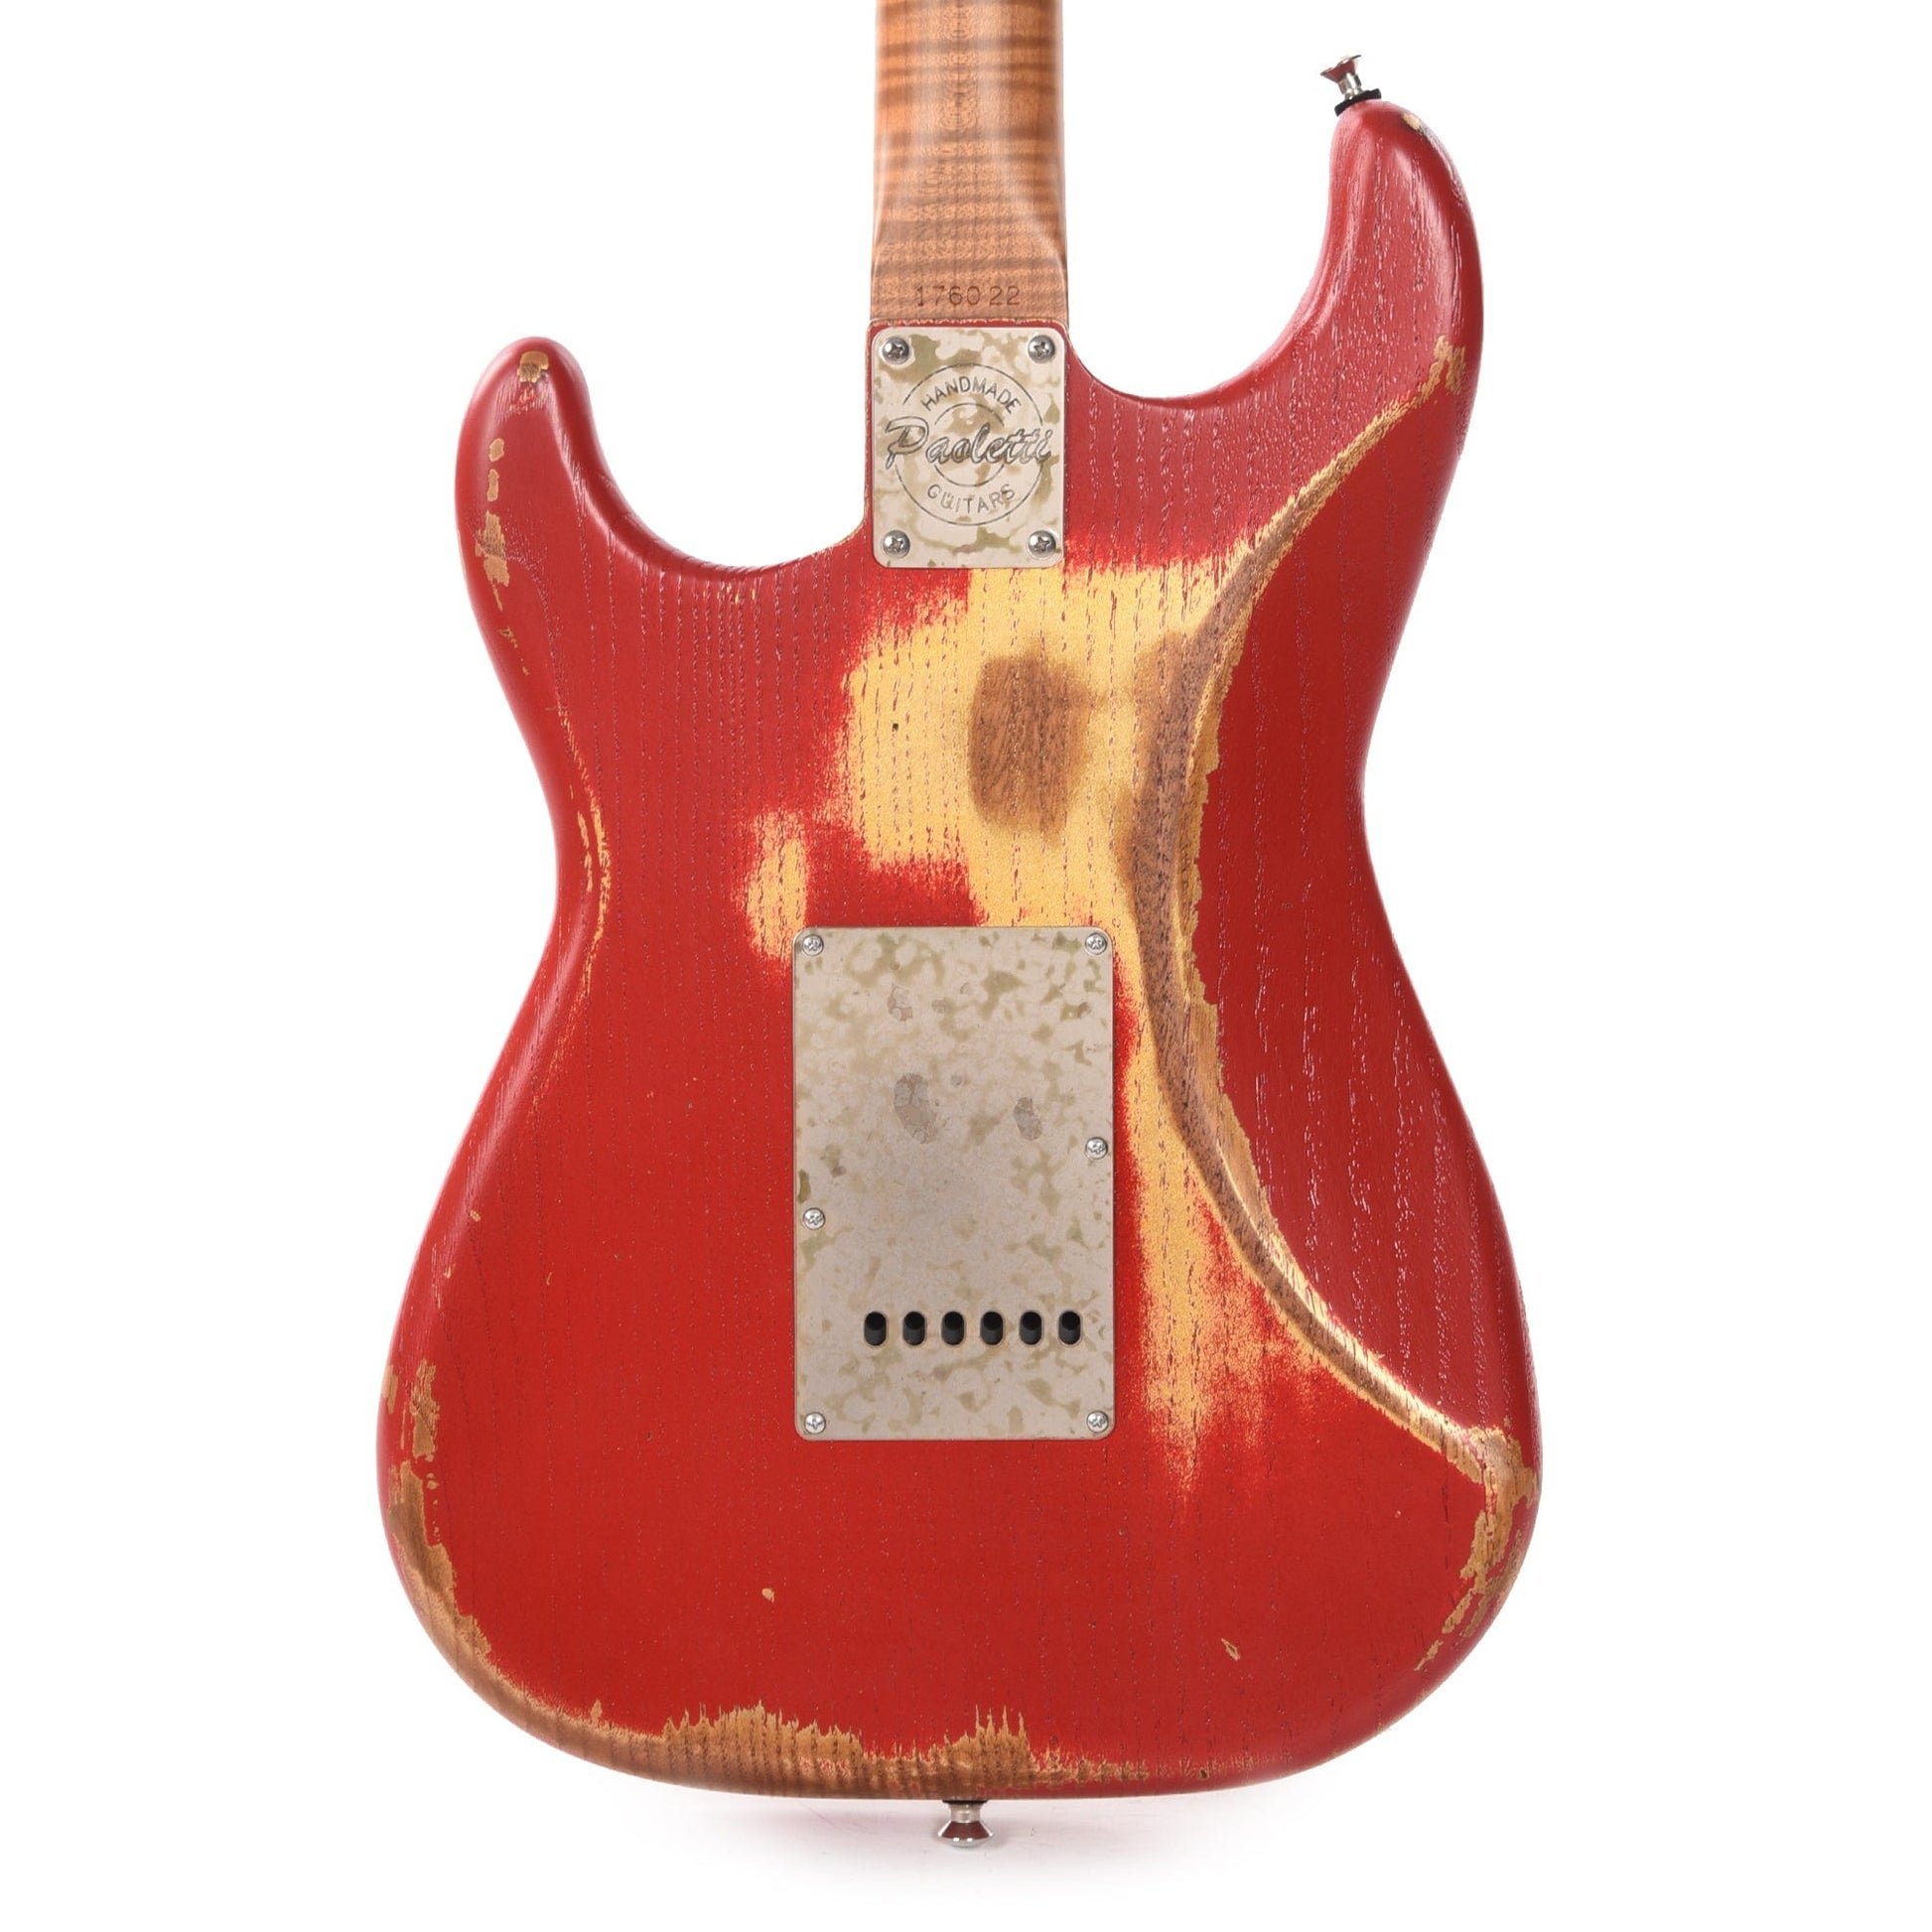 Paoletti Loft Series Stratospheric Gold Ruby w/Birdseye Maple Neck Electric Guitars / Solid Body